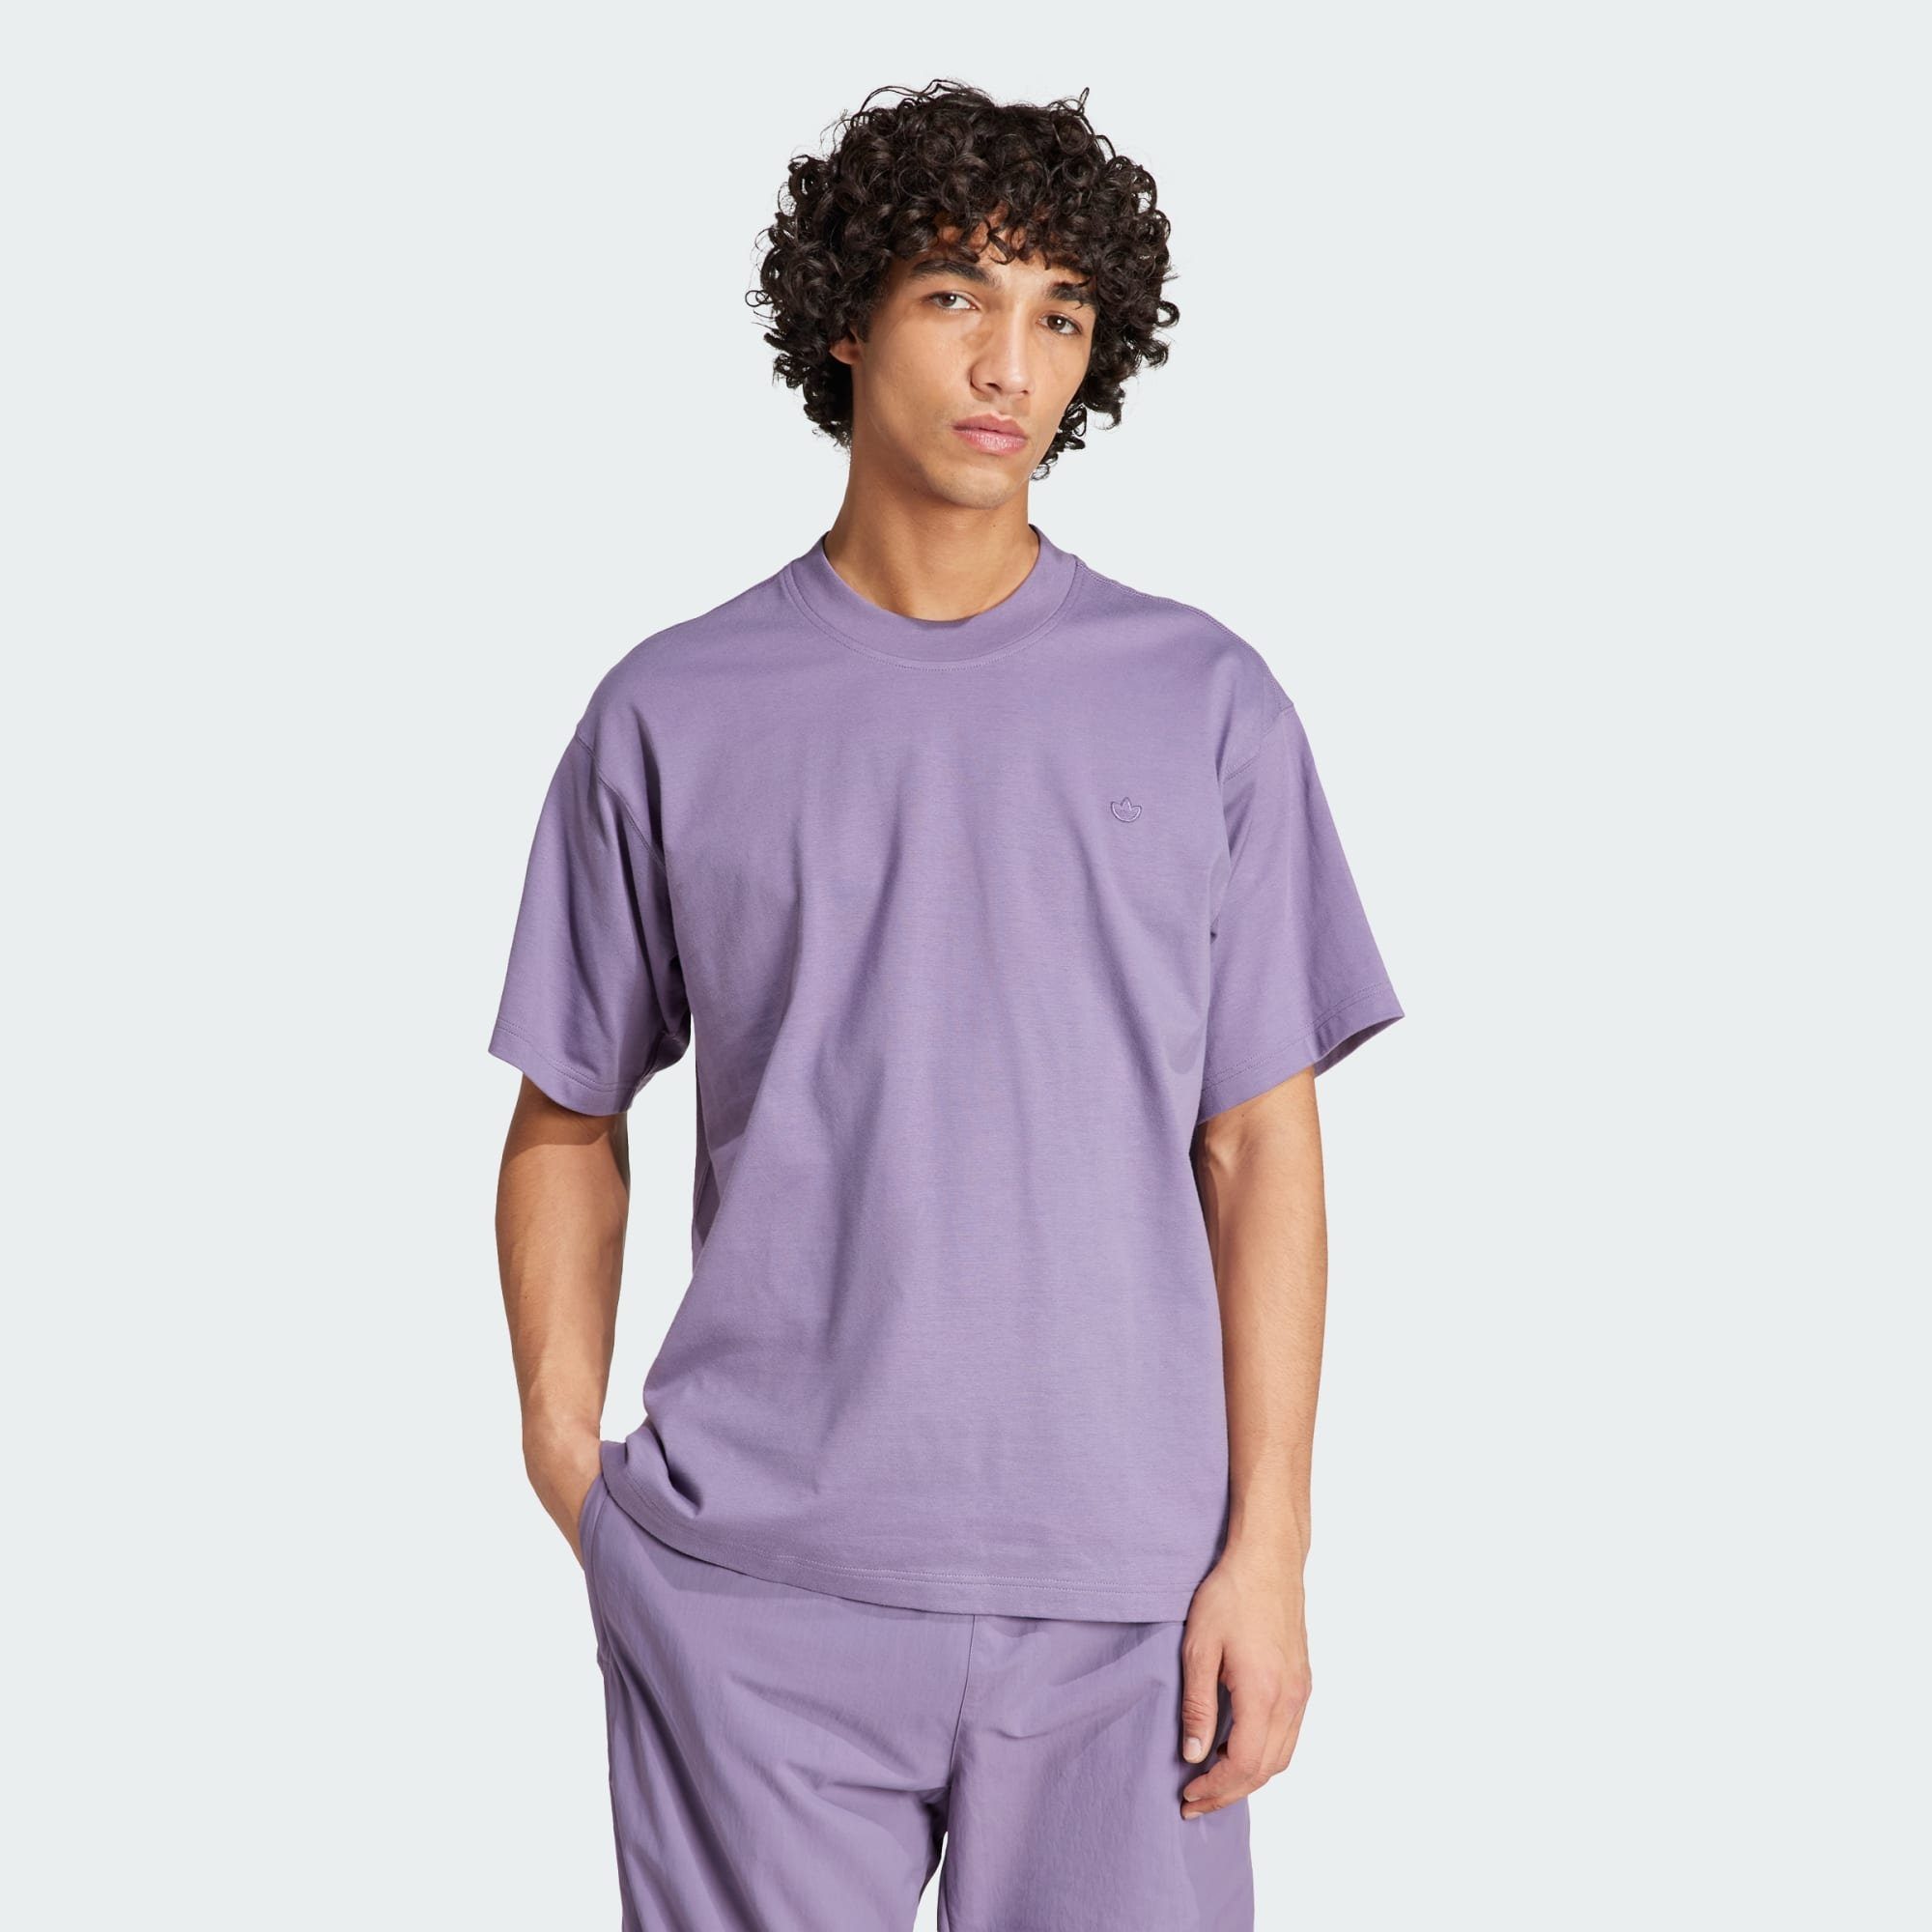 neueste Entdeckung adidas Originals T-SHIRT Shadow Violet CONTEMPO T-Shirt ADICOLOR